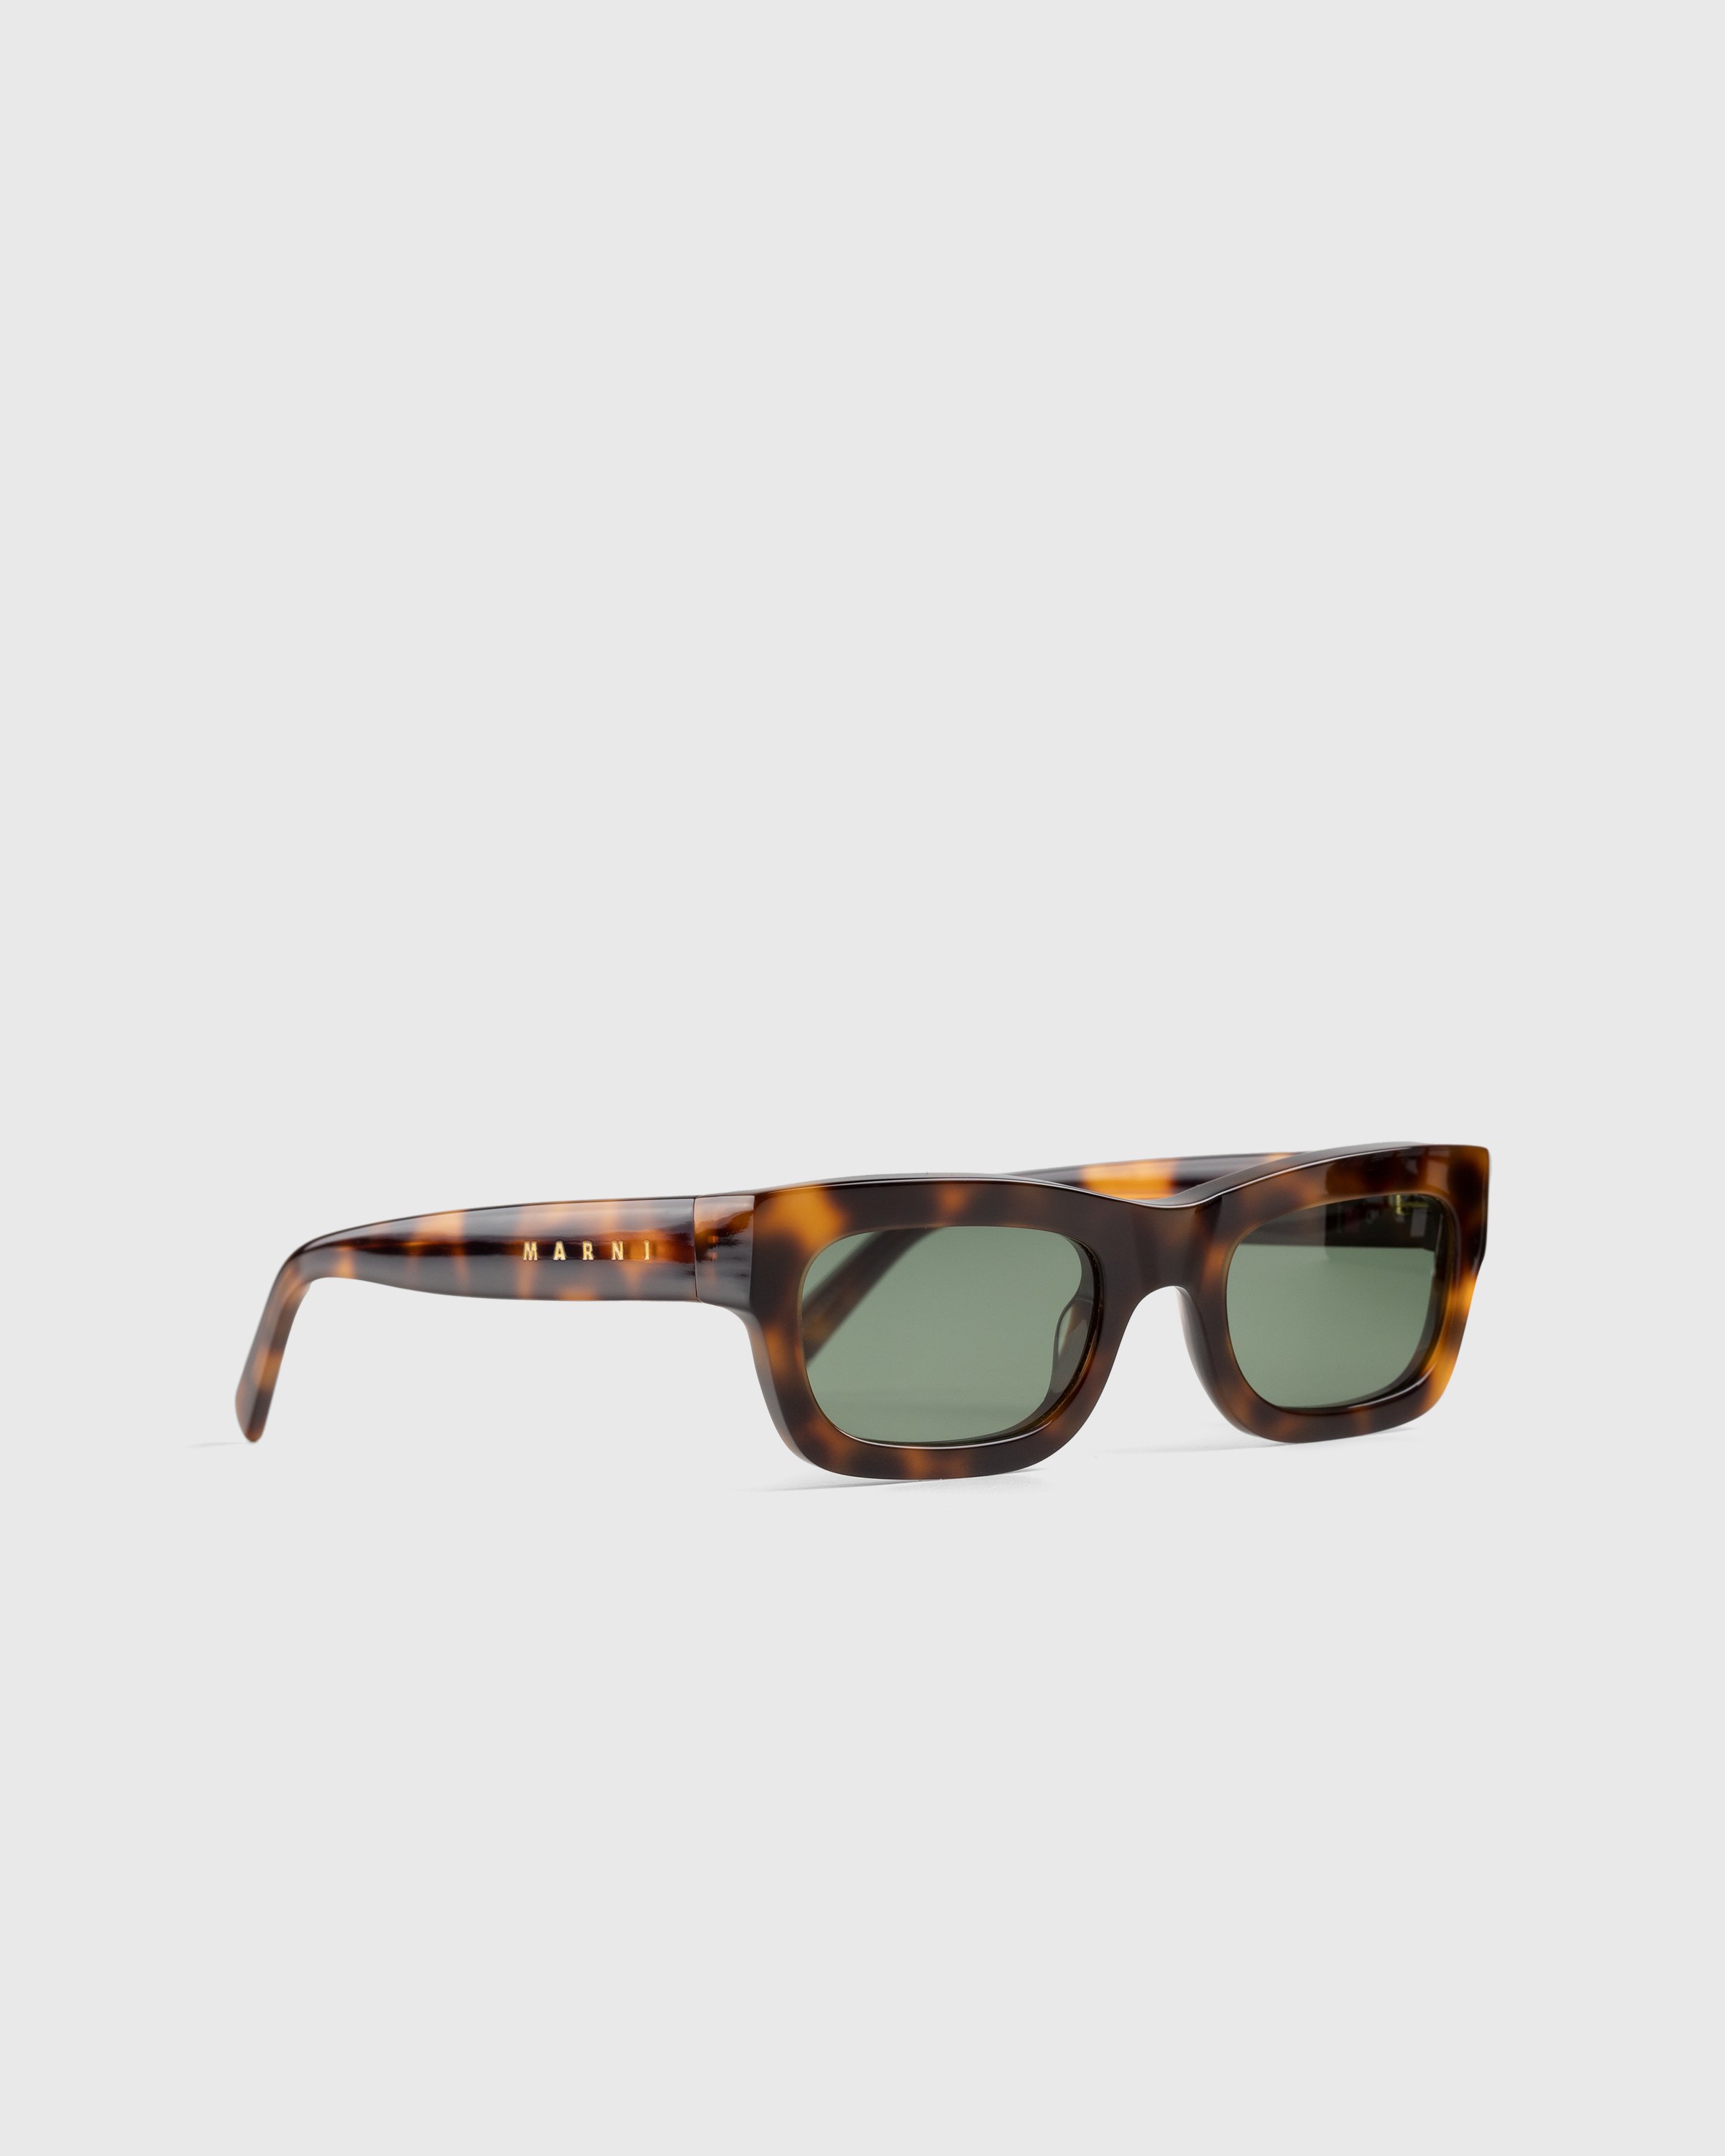 Marni - Kawasan Falls Sunglasses Havana - Accessories - Brown - Image 2